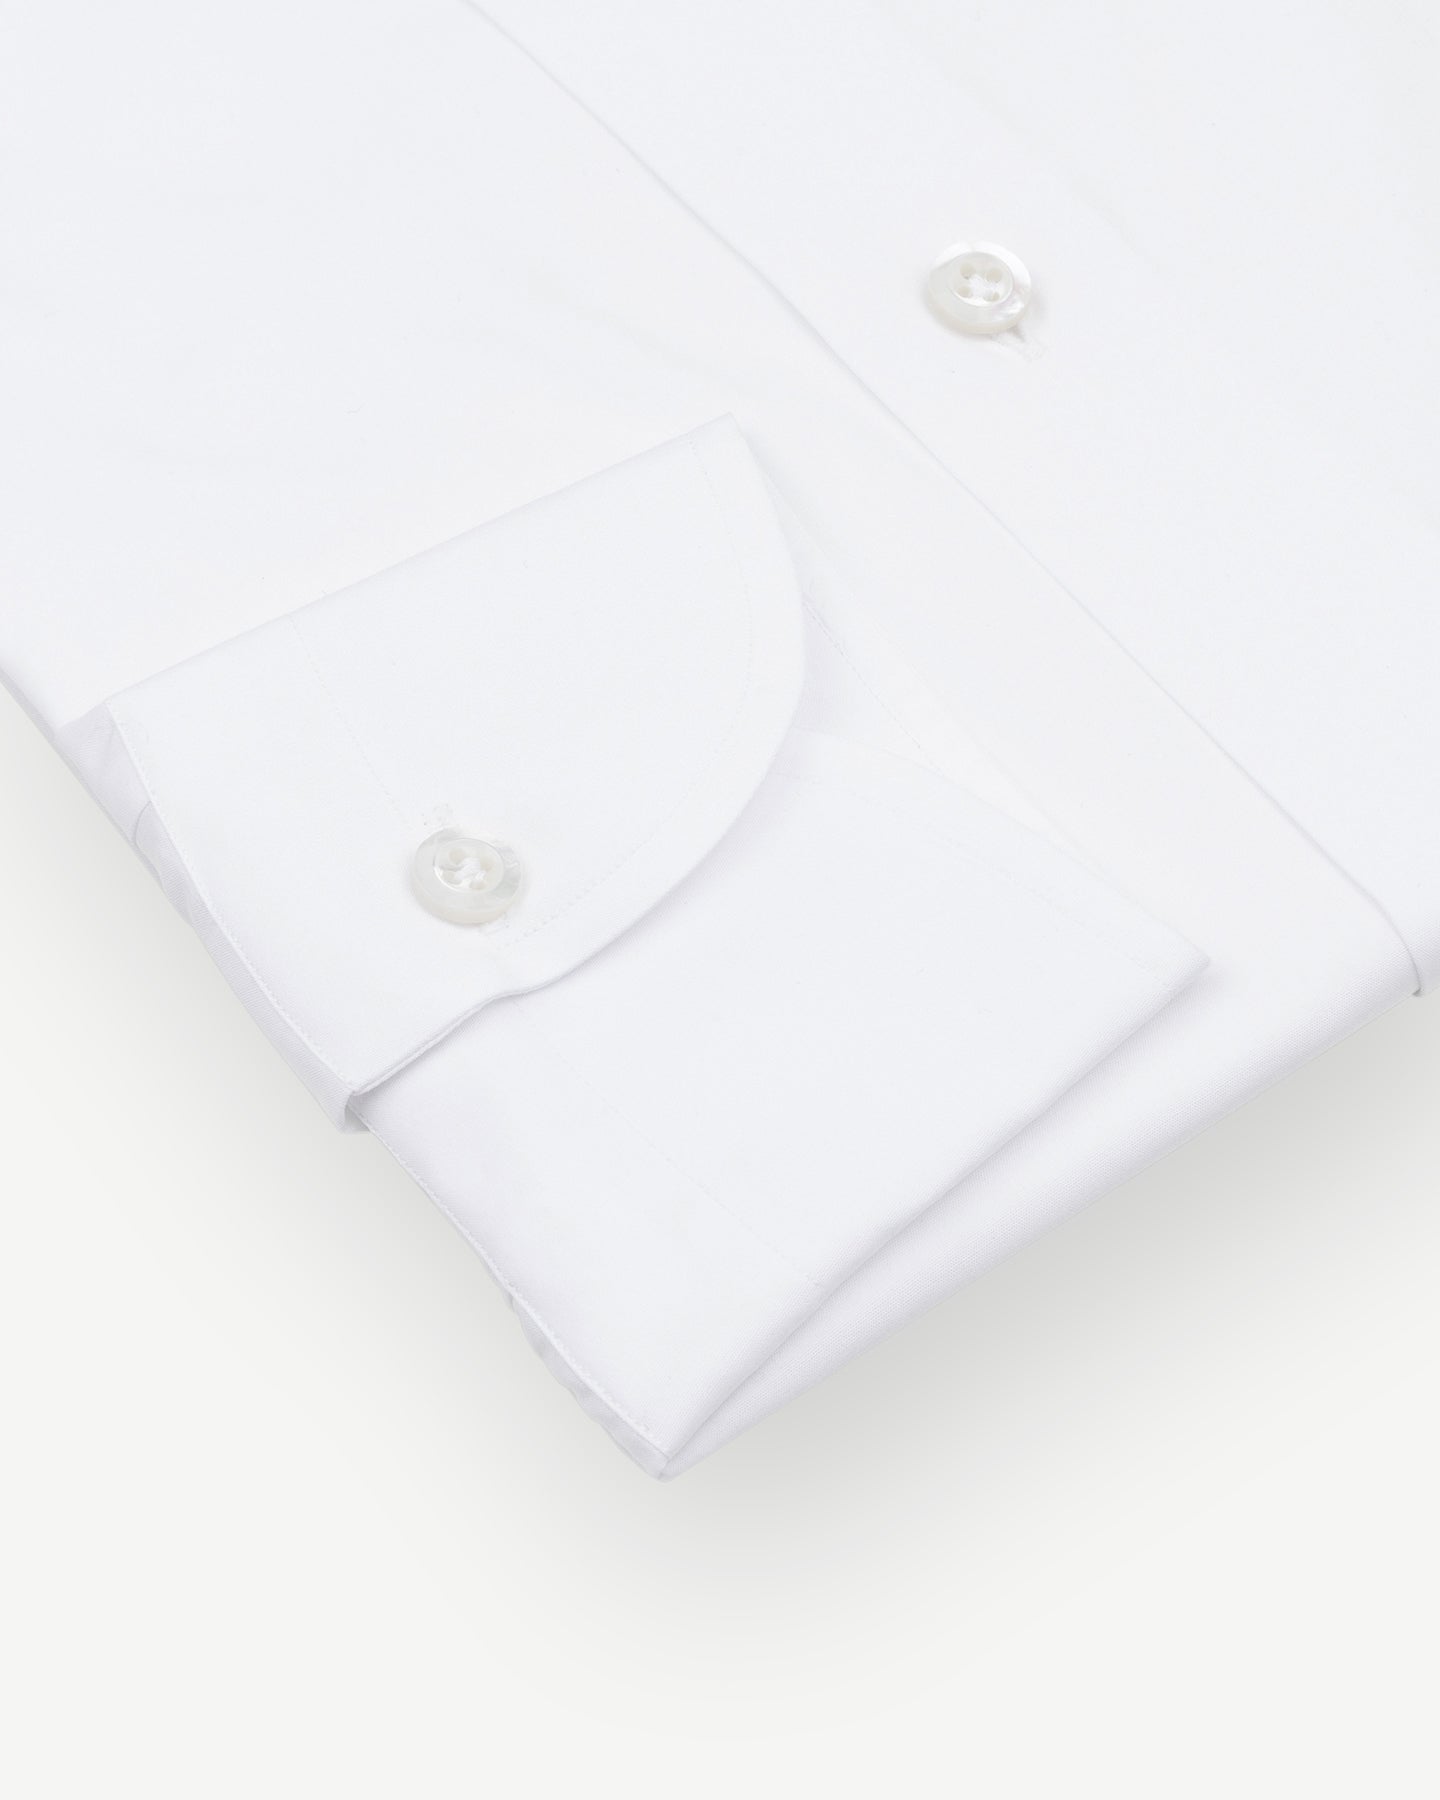 White poplin dress shirt with single conical cuffs